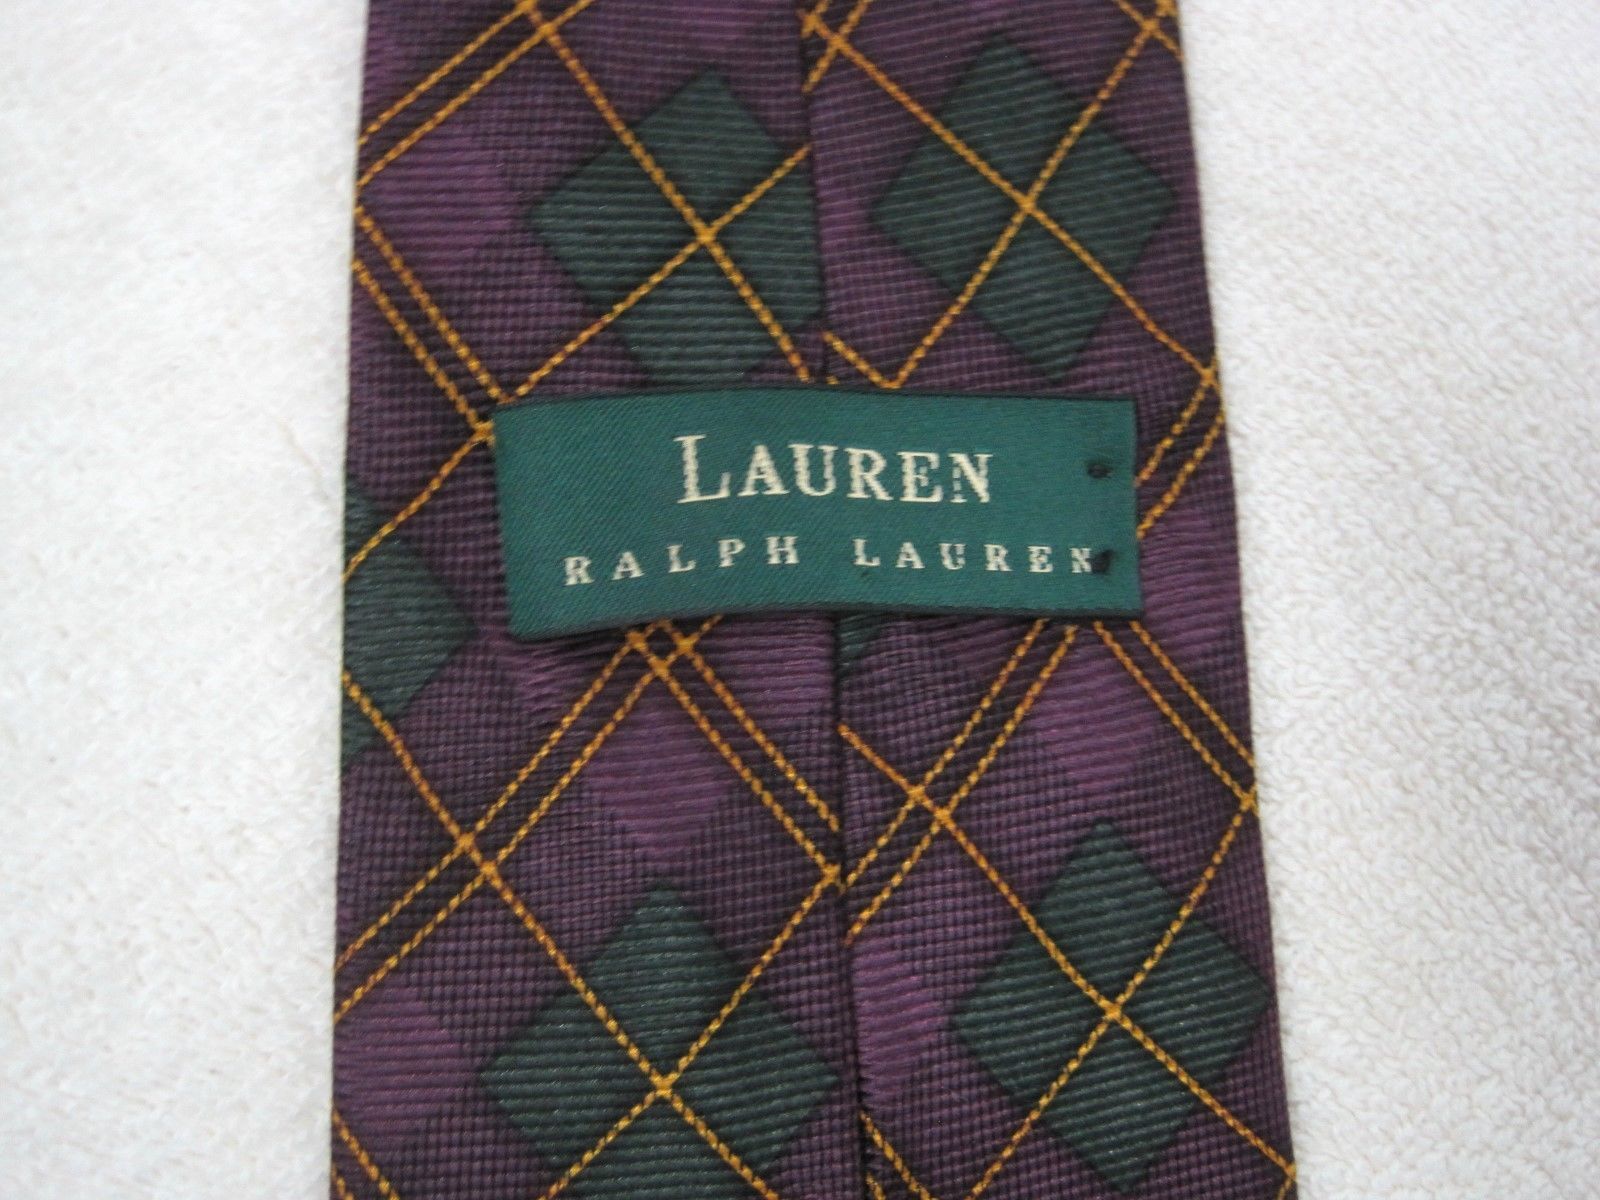 34 Ralph Lauren Green Label - Label Design Ideas 2020